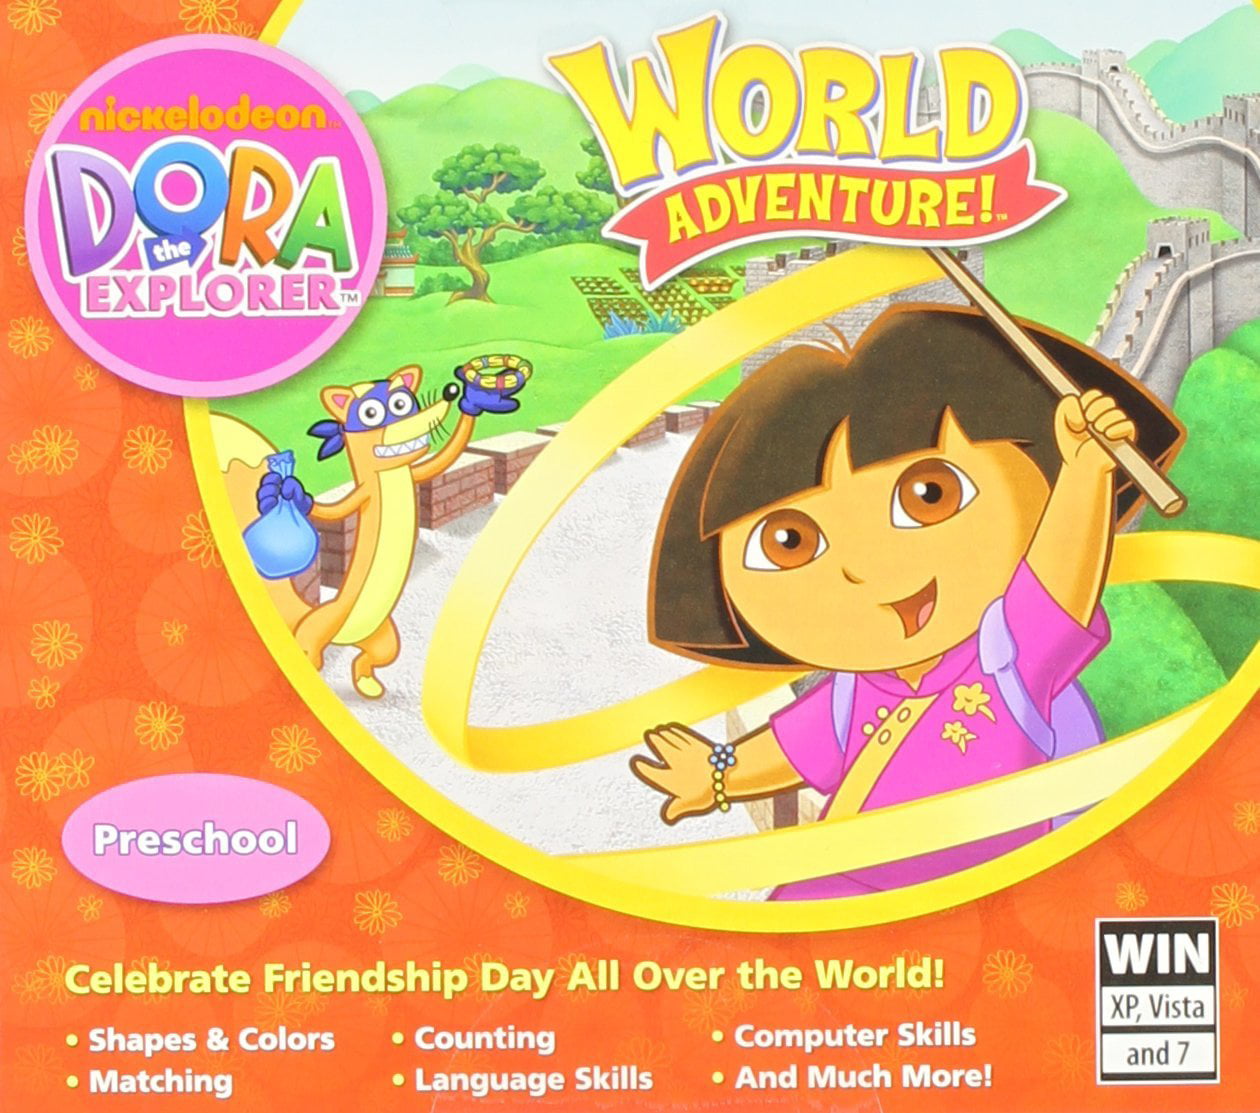 Doras world adventure. Dora the Explorer World Adventure. GBA Dora the Explorer Dora's World Adventure. Dora the Explorer: Dora's World Adventure для геймбоя. Dora the Explorer Backpack Adventure PC.